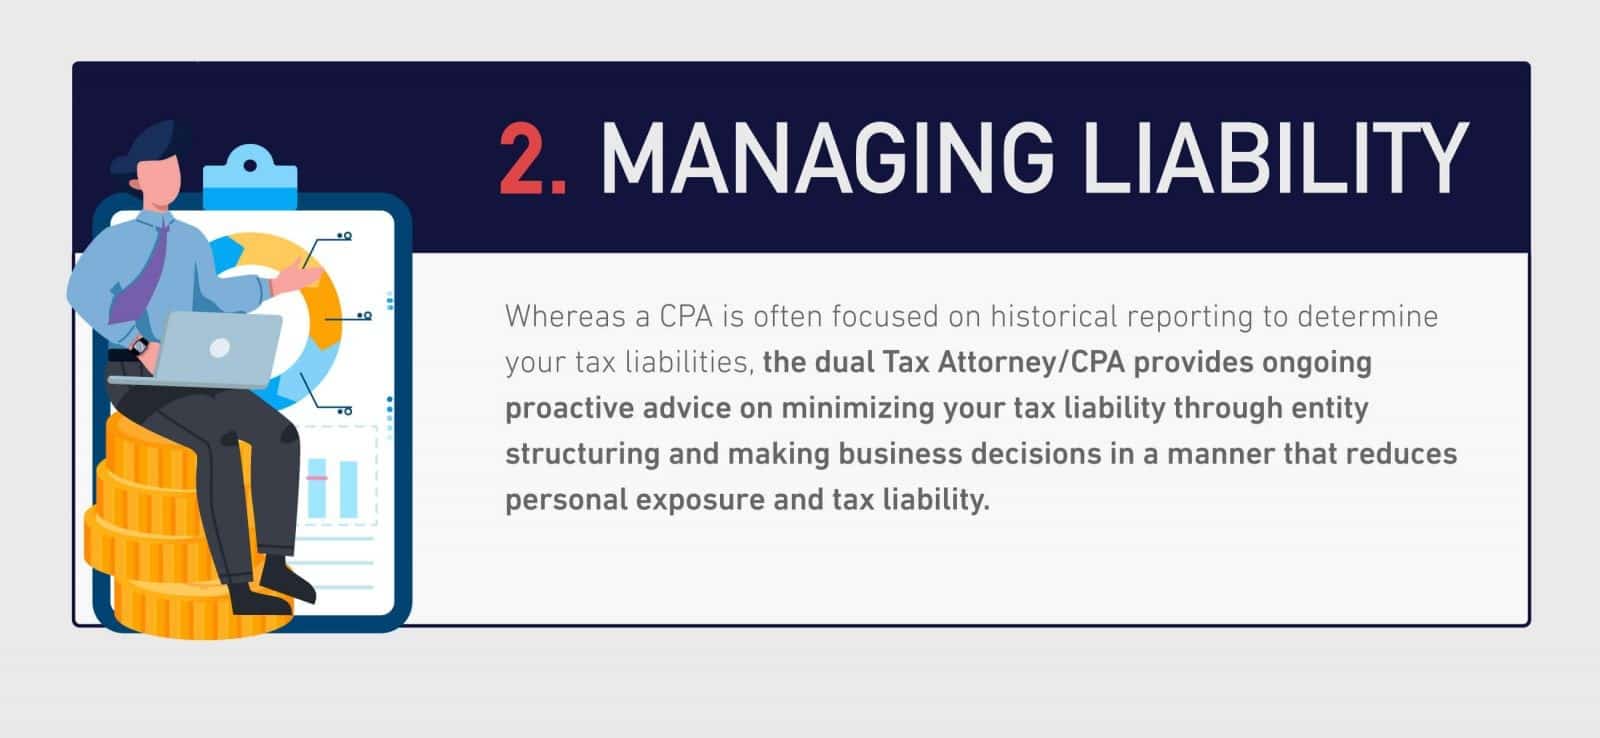 Managing-liability-klasing-associates-panorama-city-tax-attorney